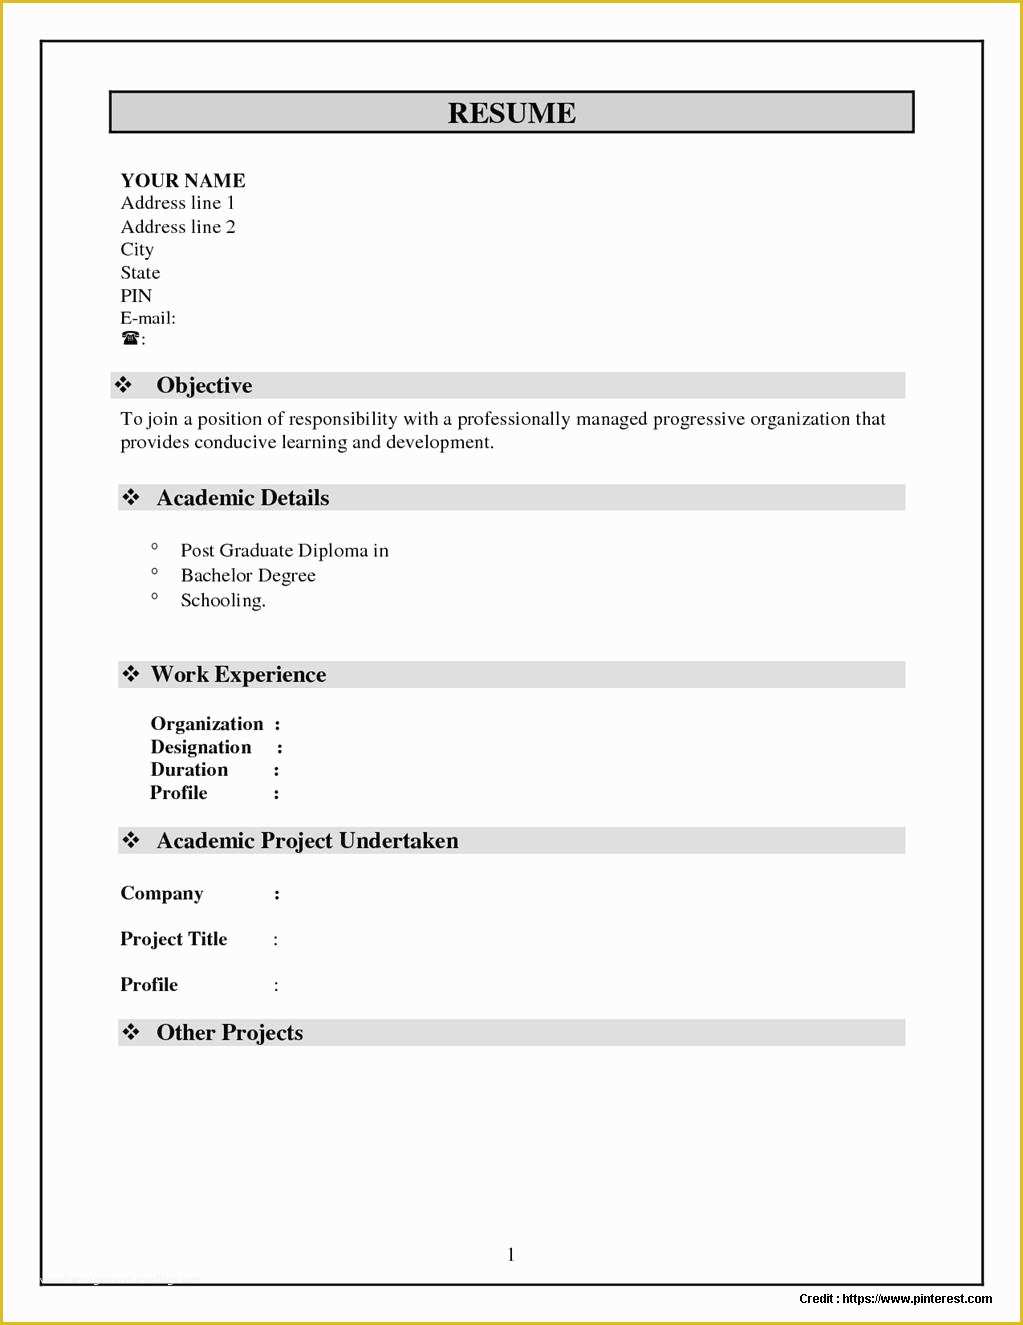 Pdf Resume Template Free Download Of Sample Resume format Pdf Download Free Resume Resume